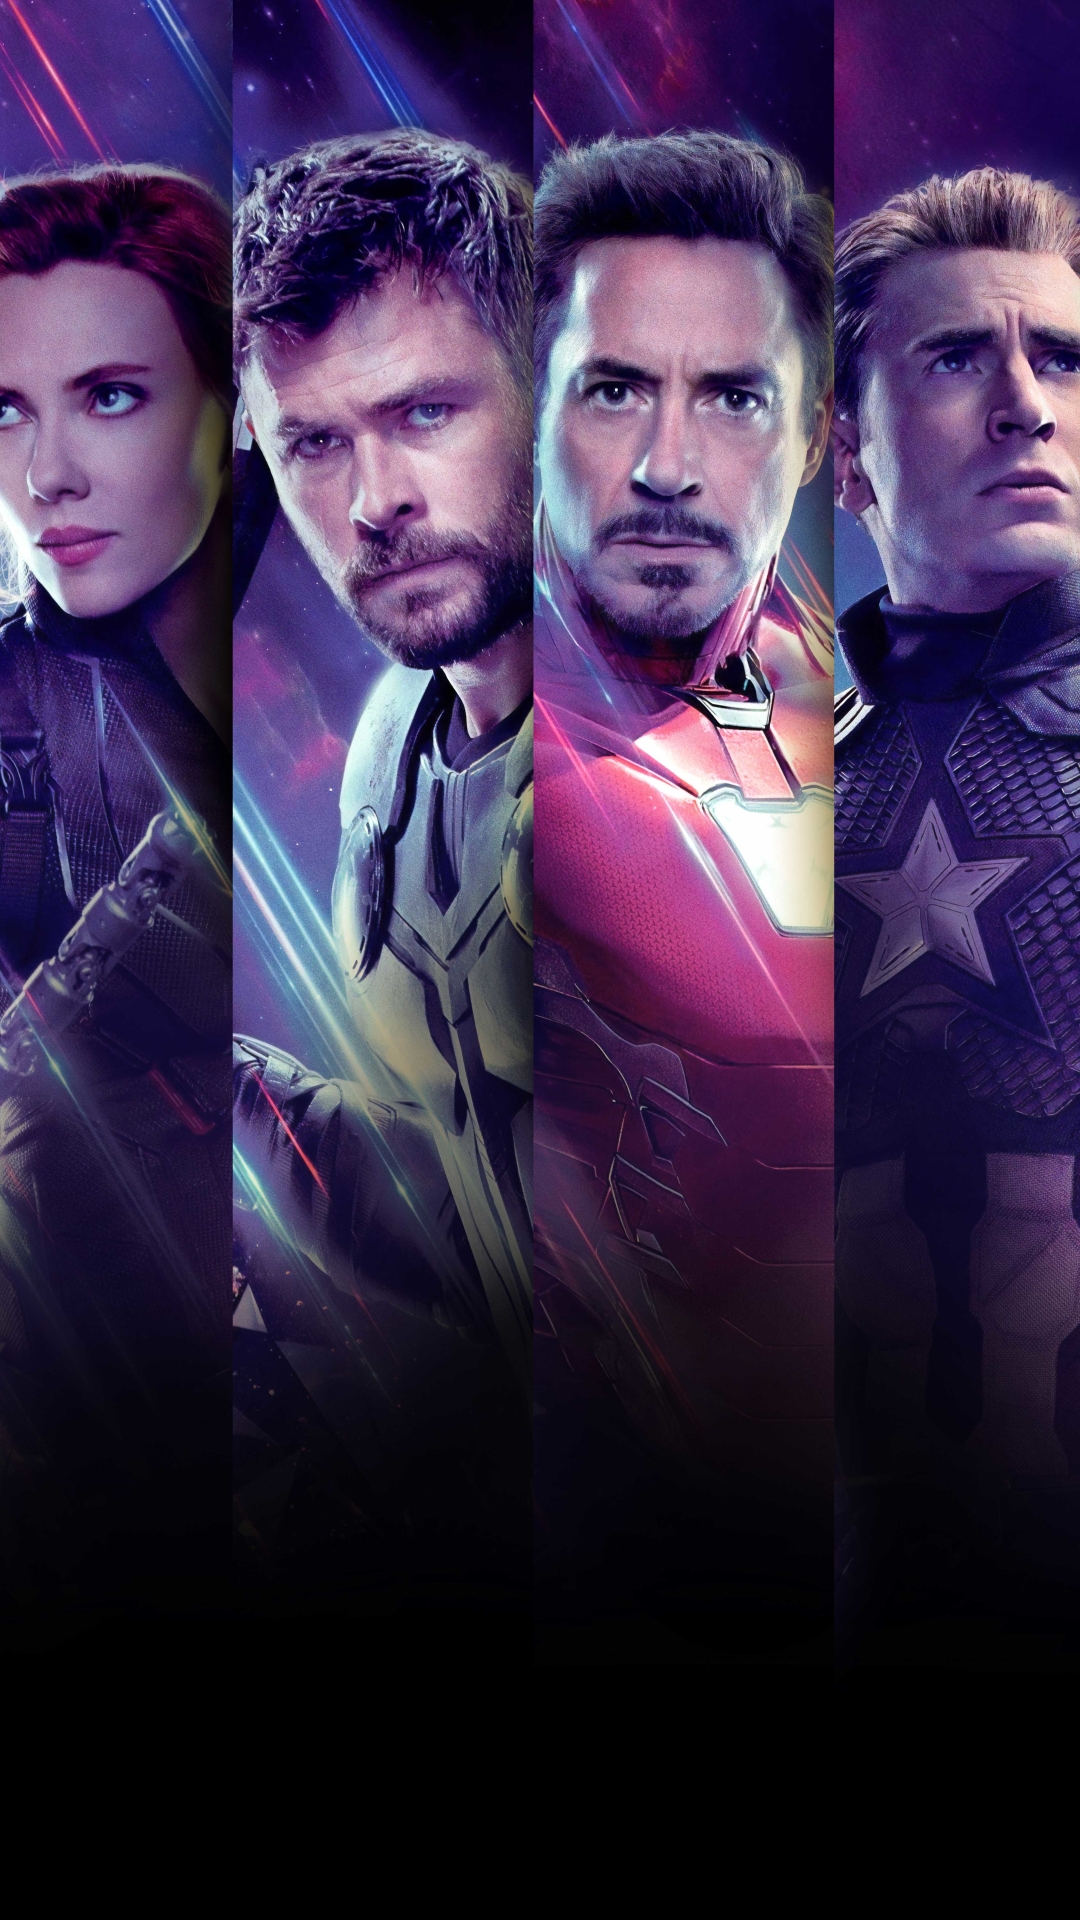  1080x1920  Avengers  Endgame  All Superhero Characters Iphone 